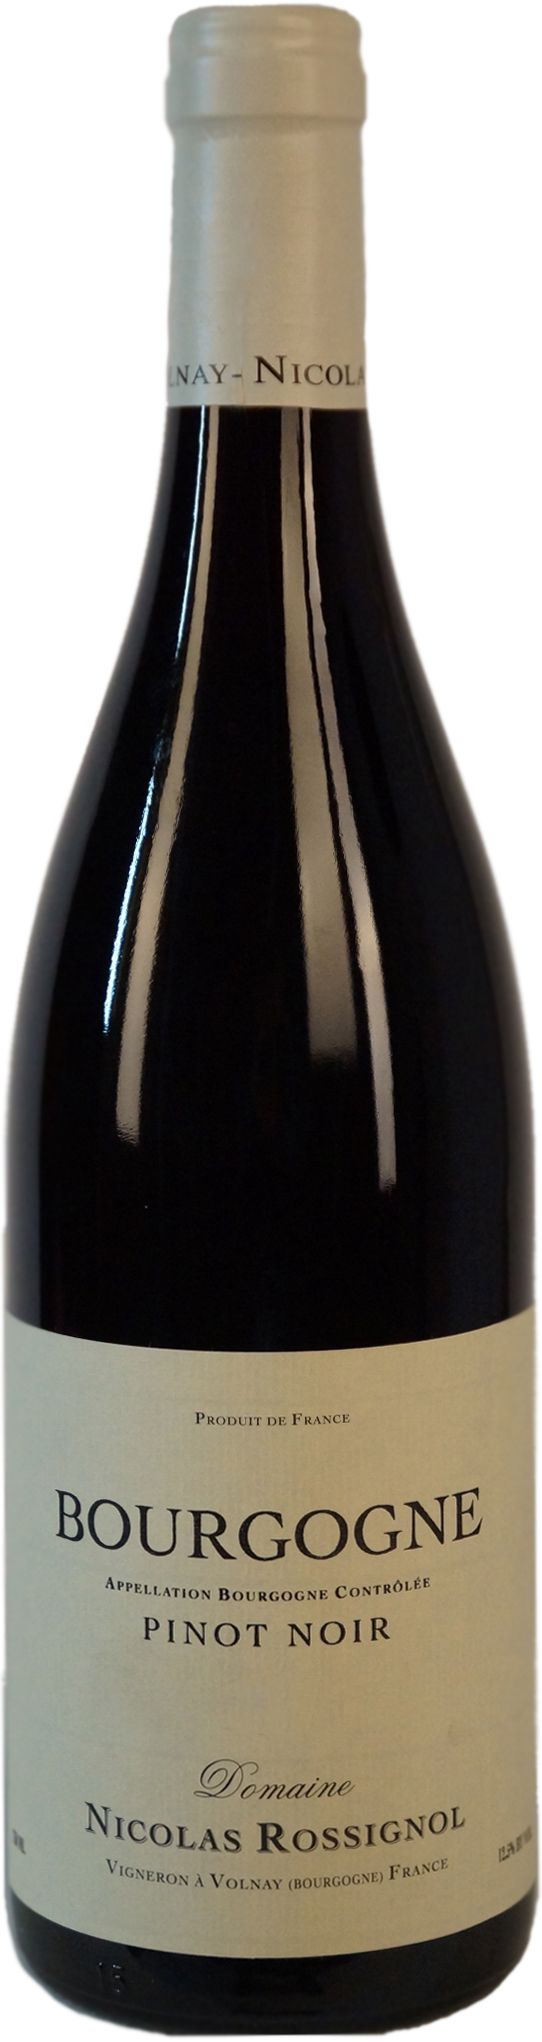 Domaine Nicolas Rossignol, Bourgogne Pinot Noir, 2015